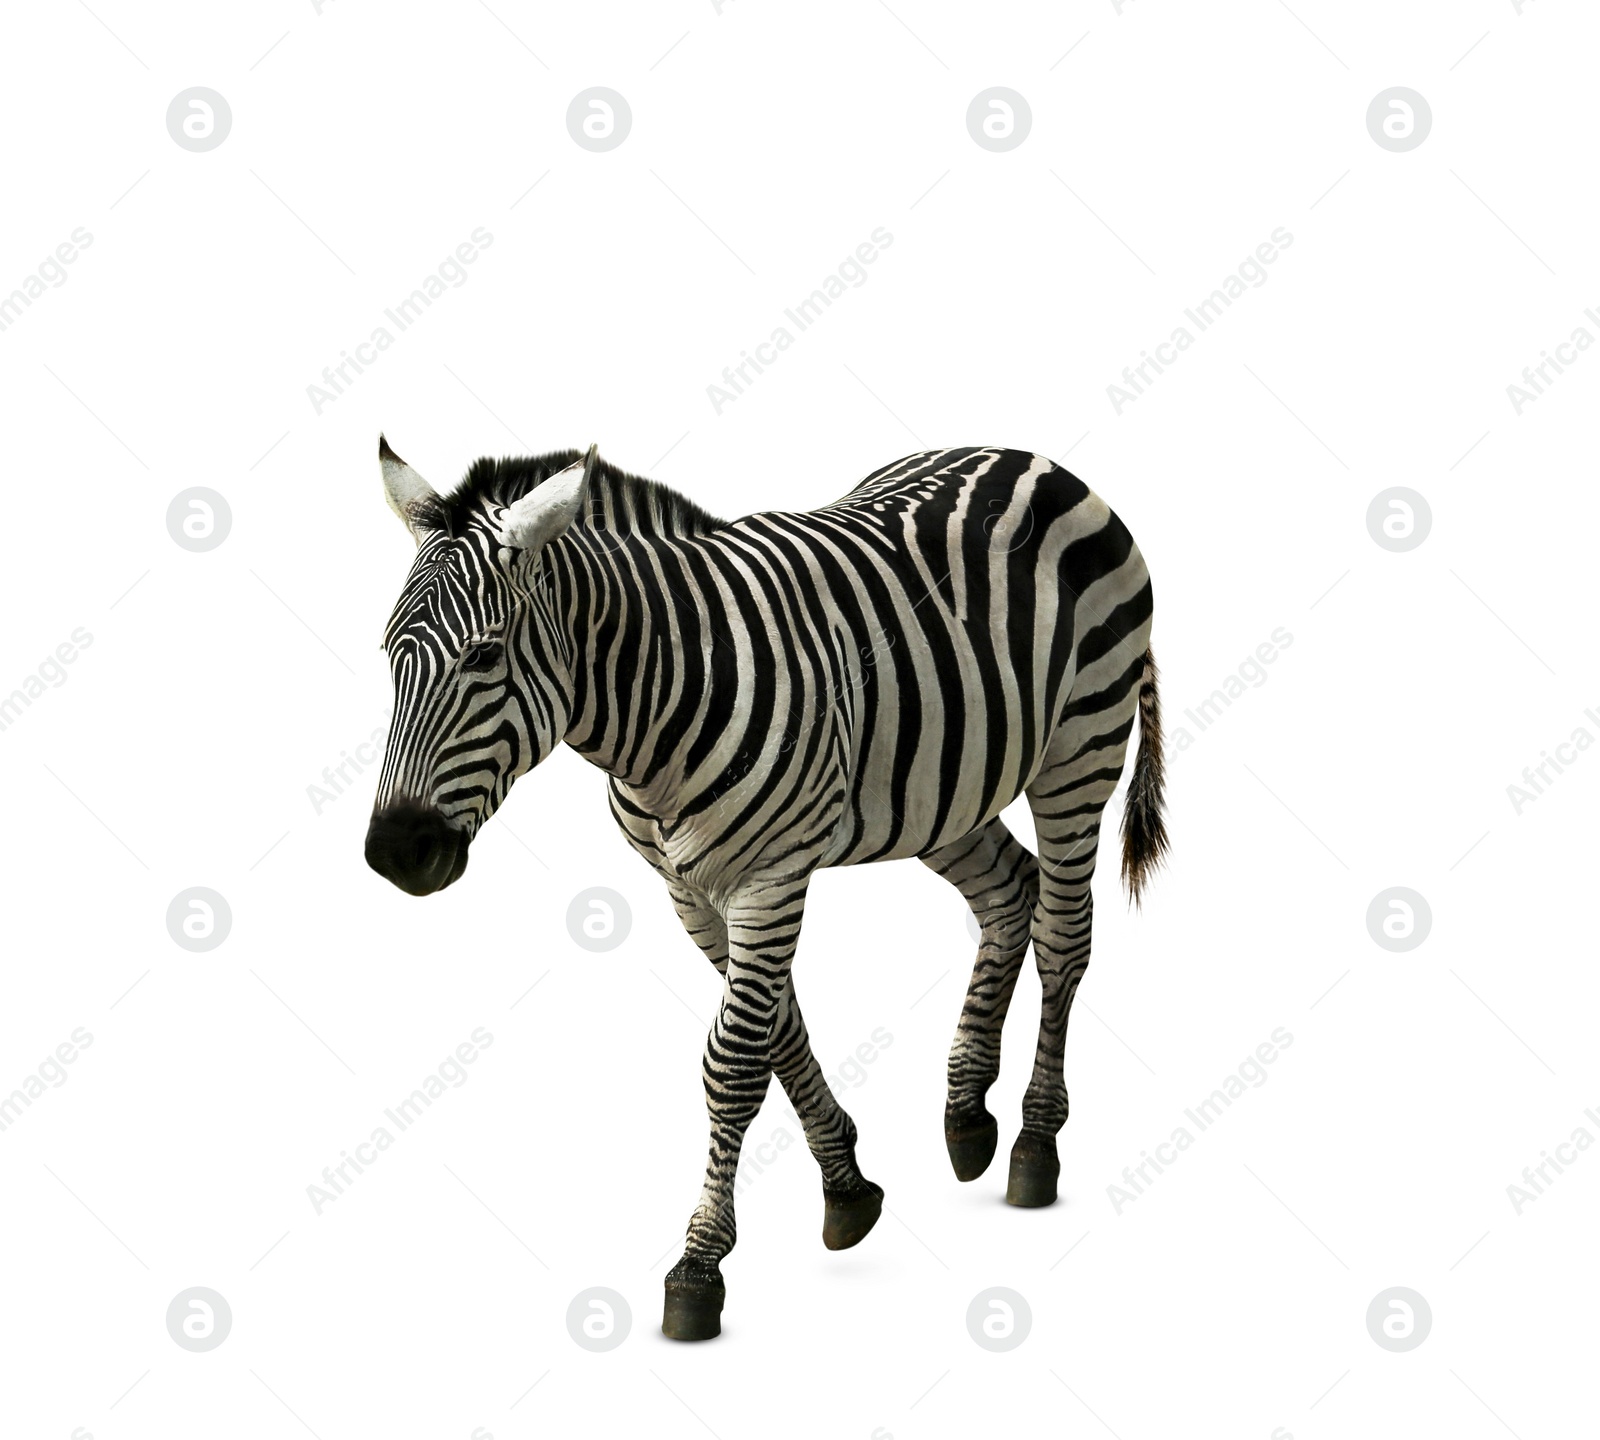 Image of Beautiful striped African zebra on white background. Wild animal